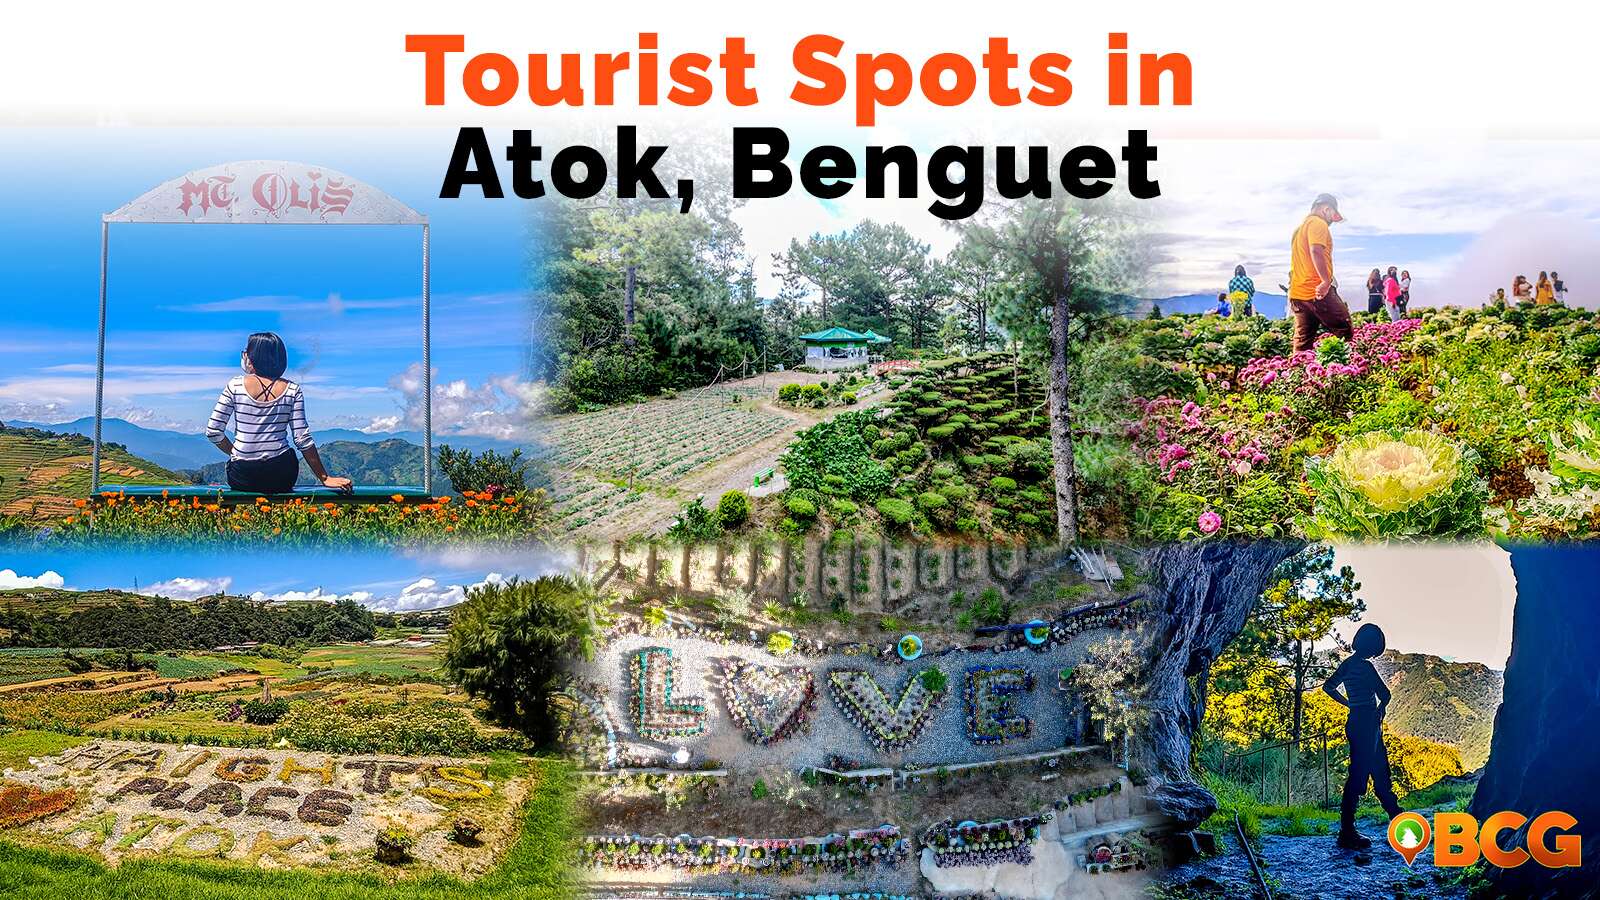 atok benguet tourist spots